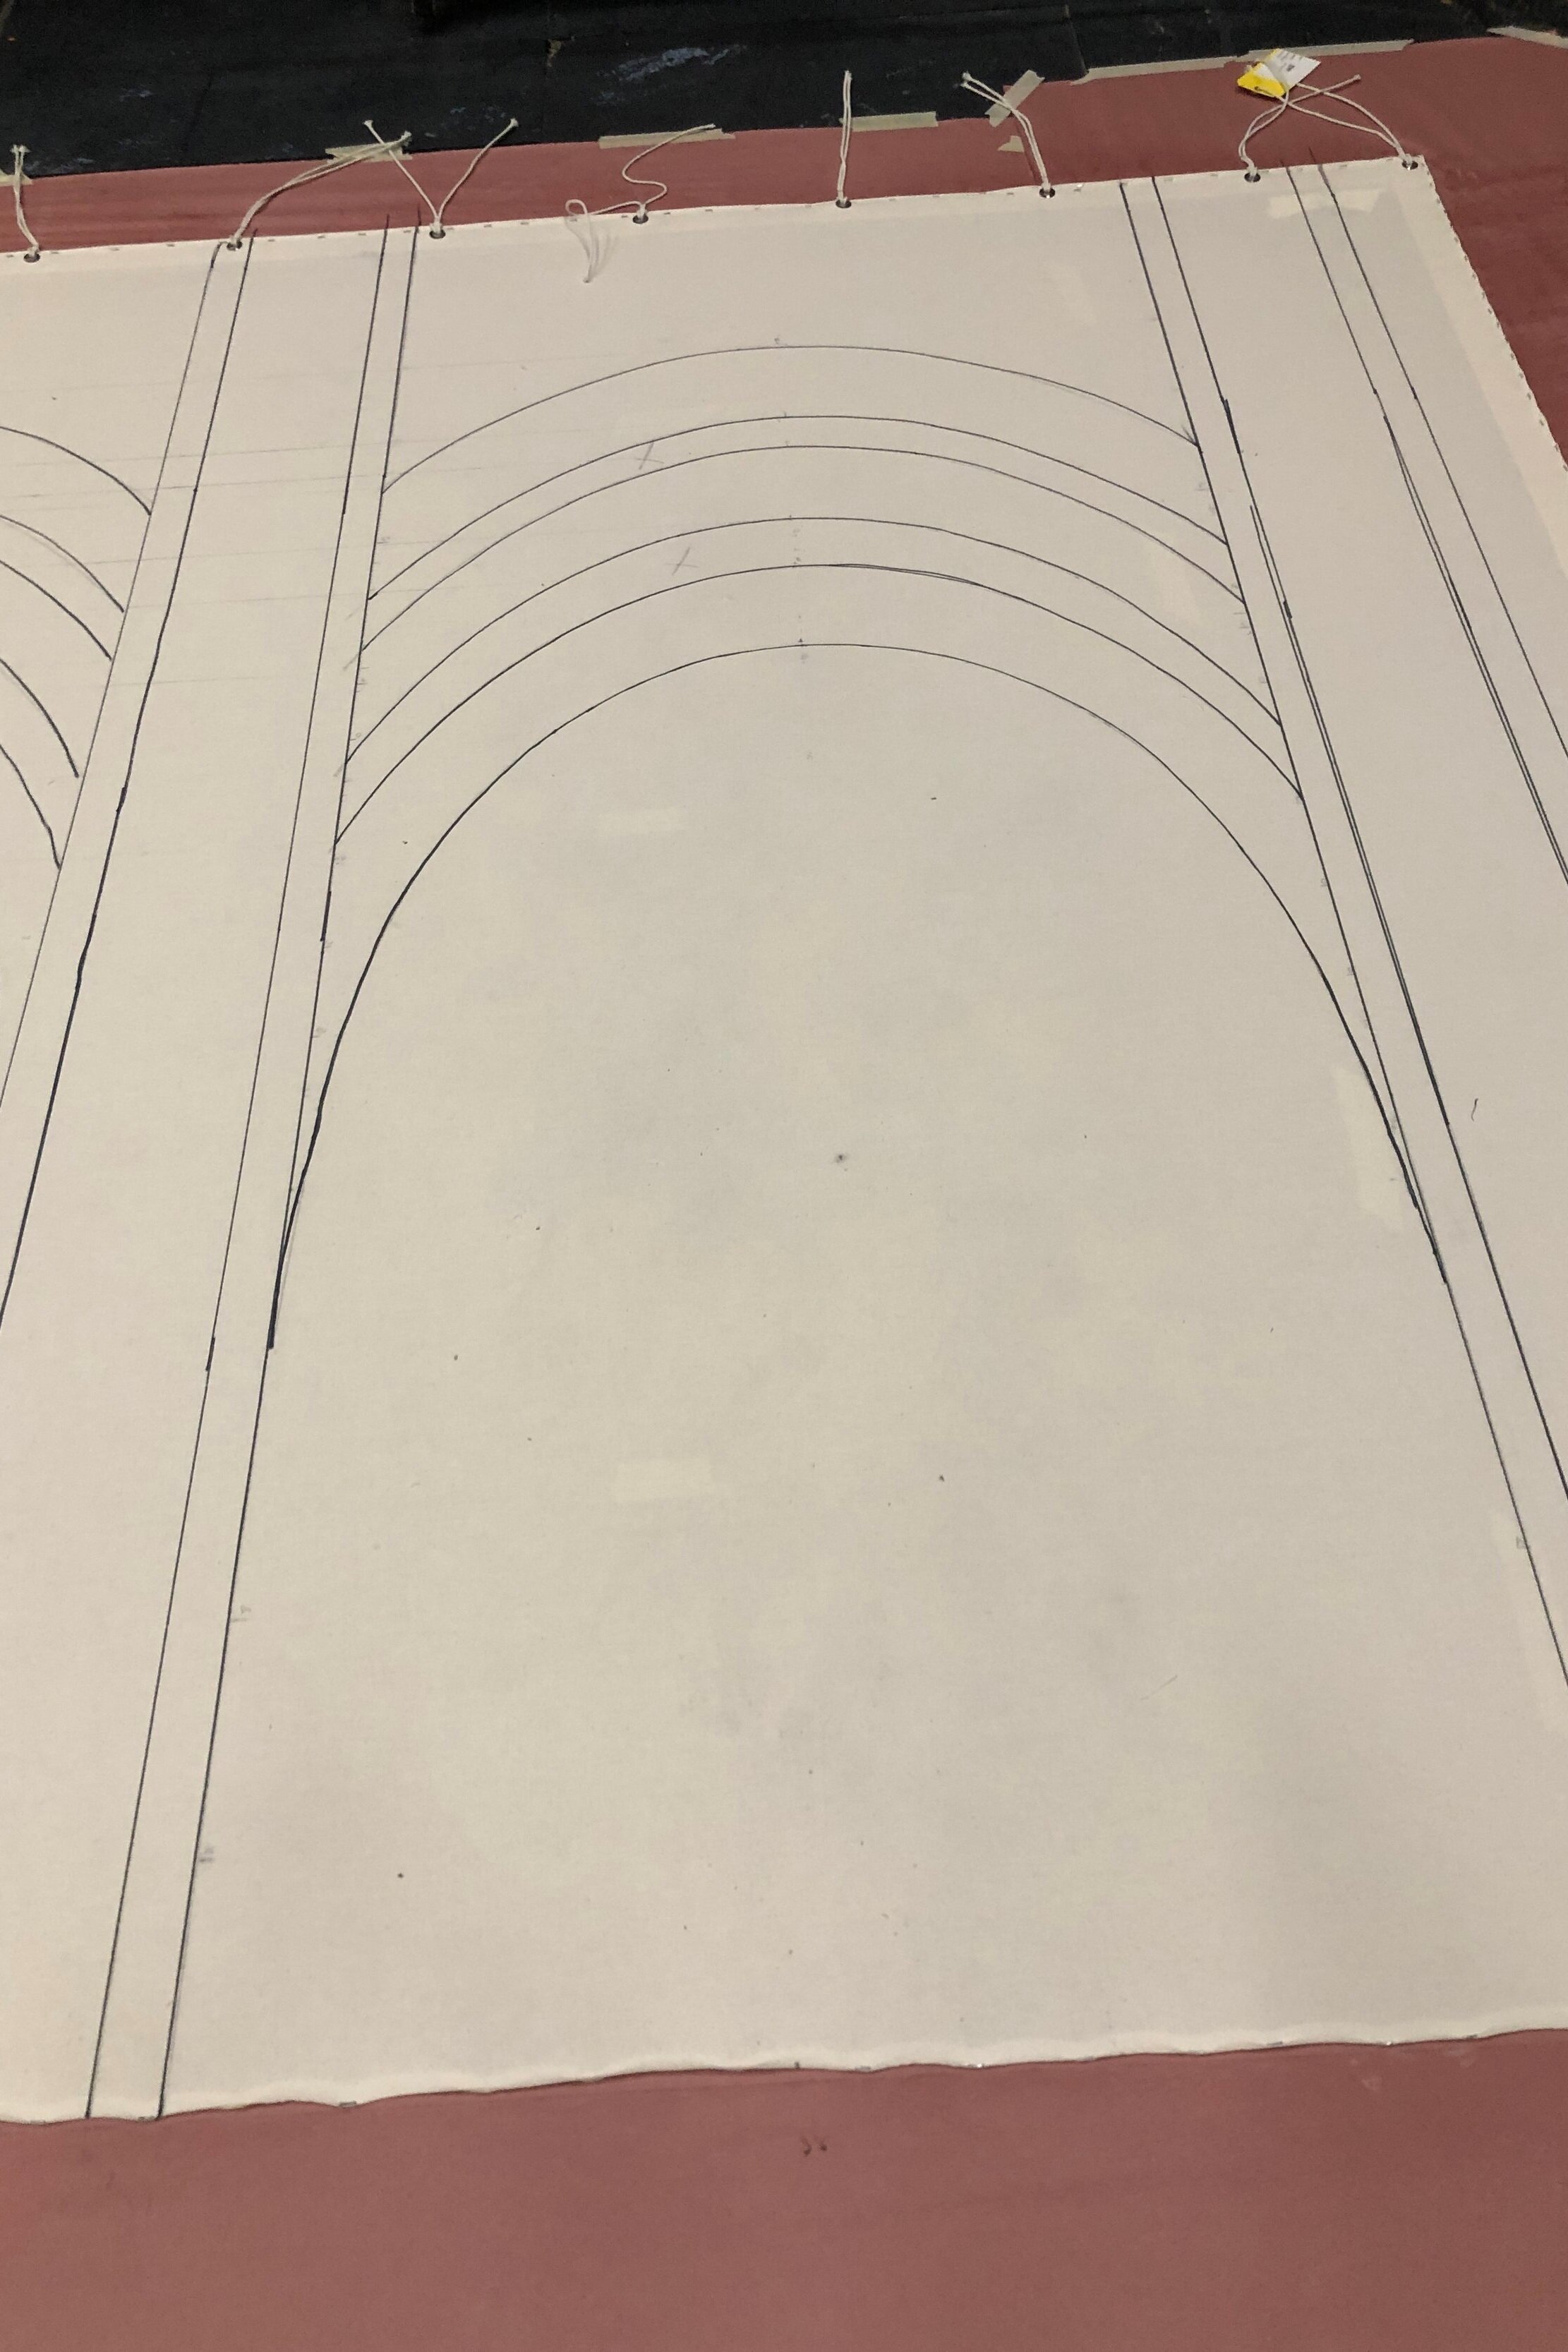 First Archway Drawn